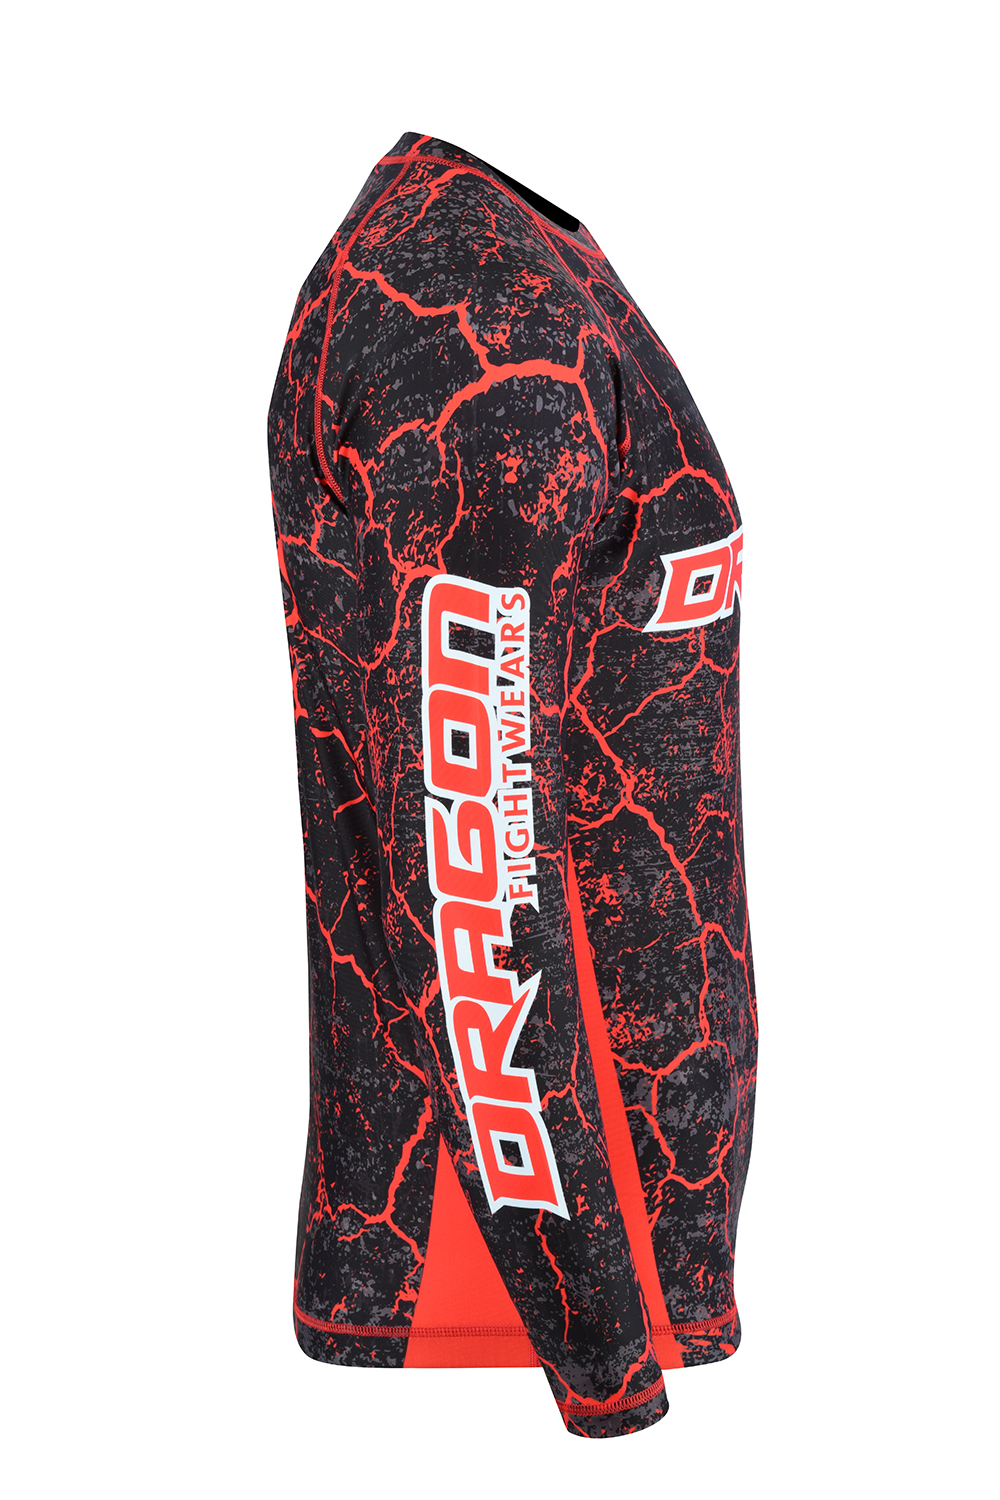 Black/Red UFC Dragon Red Texture Dry Tech Long Sleeve MMA Compression Rashguard 